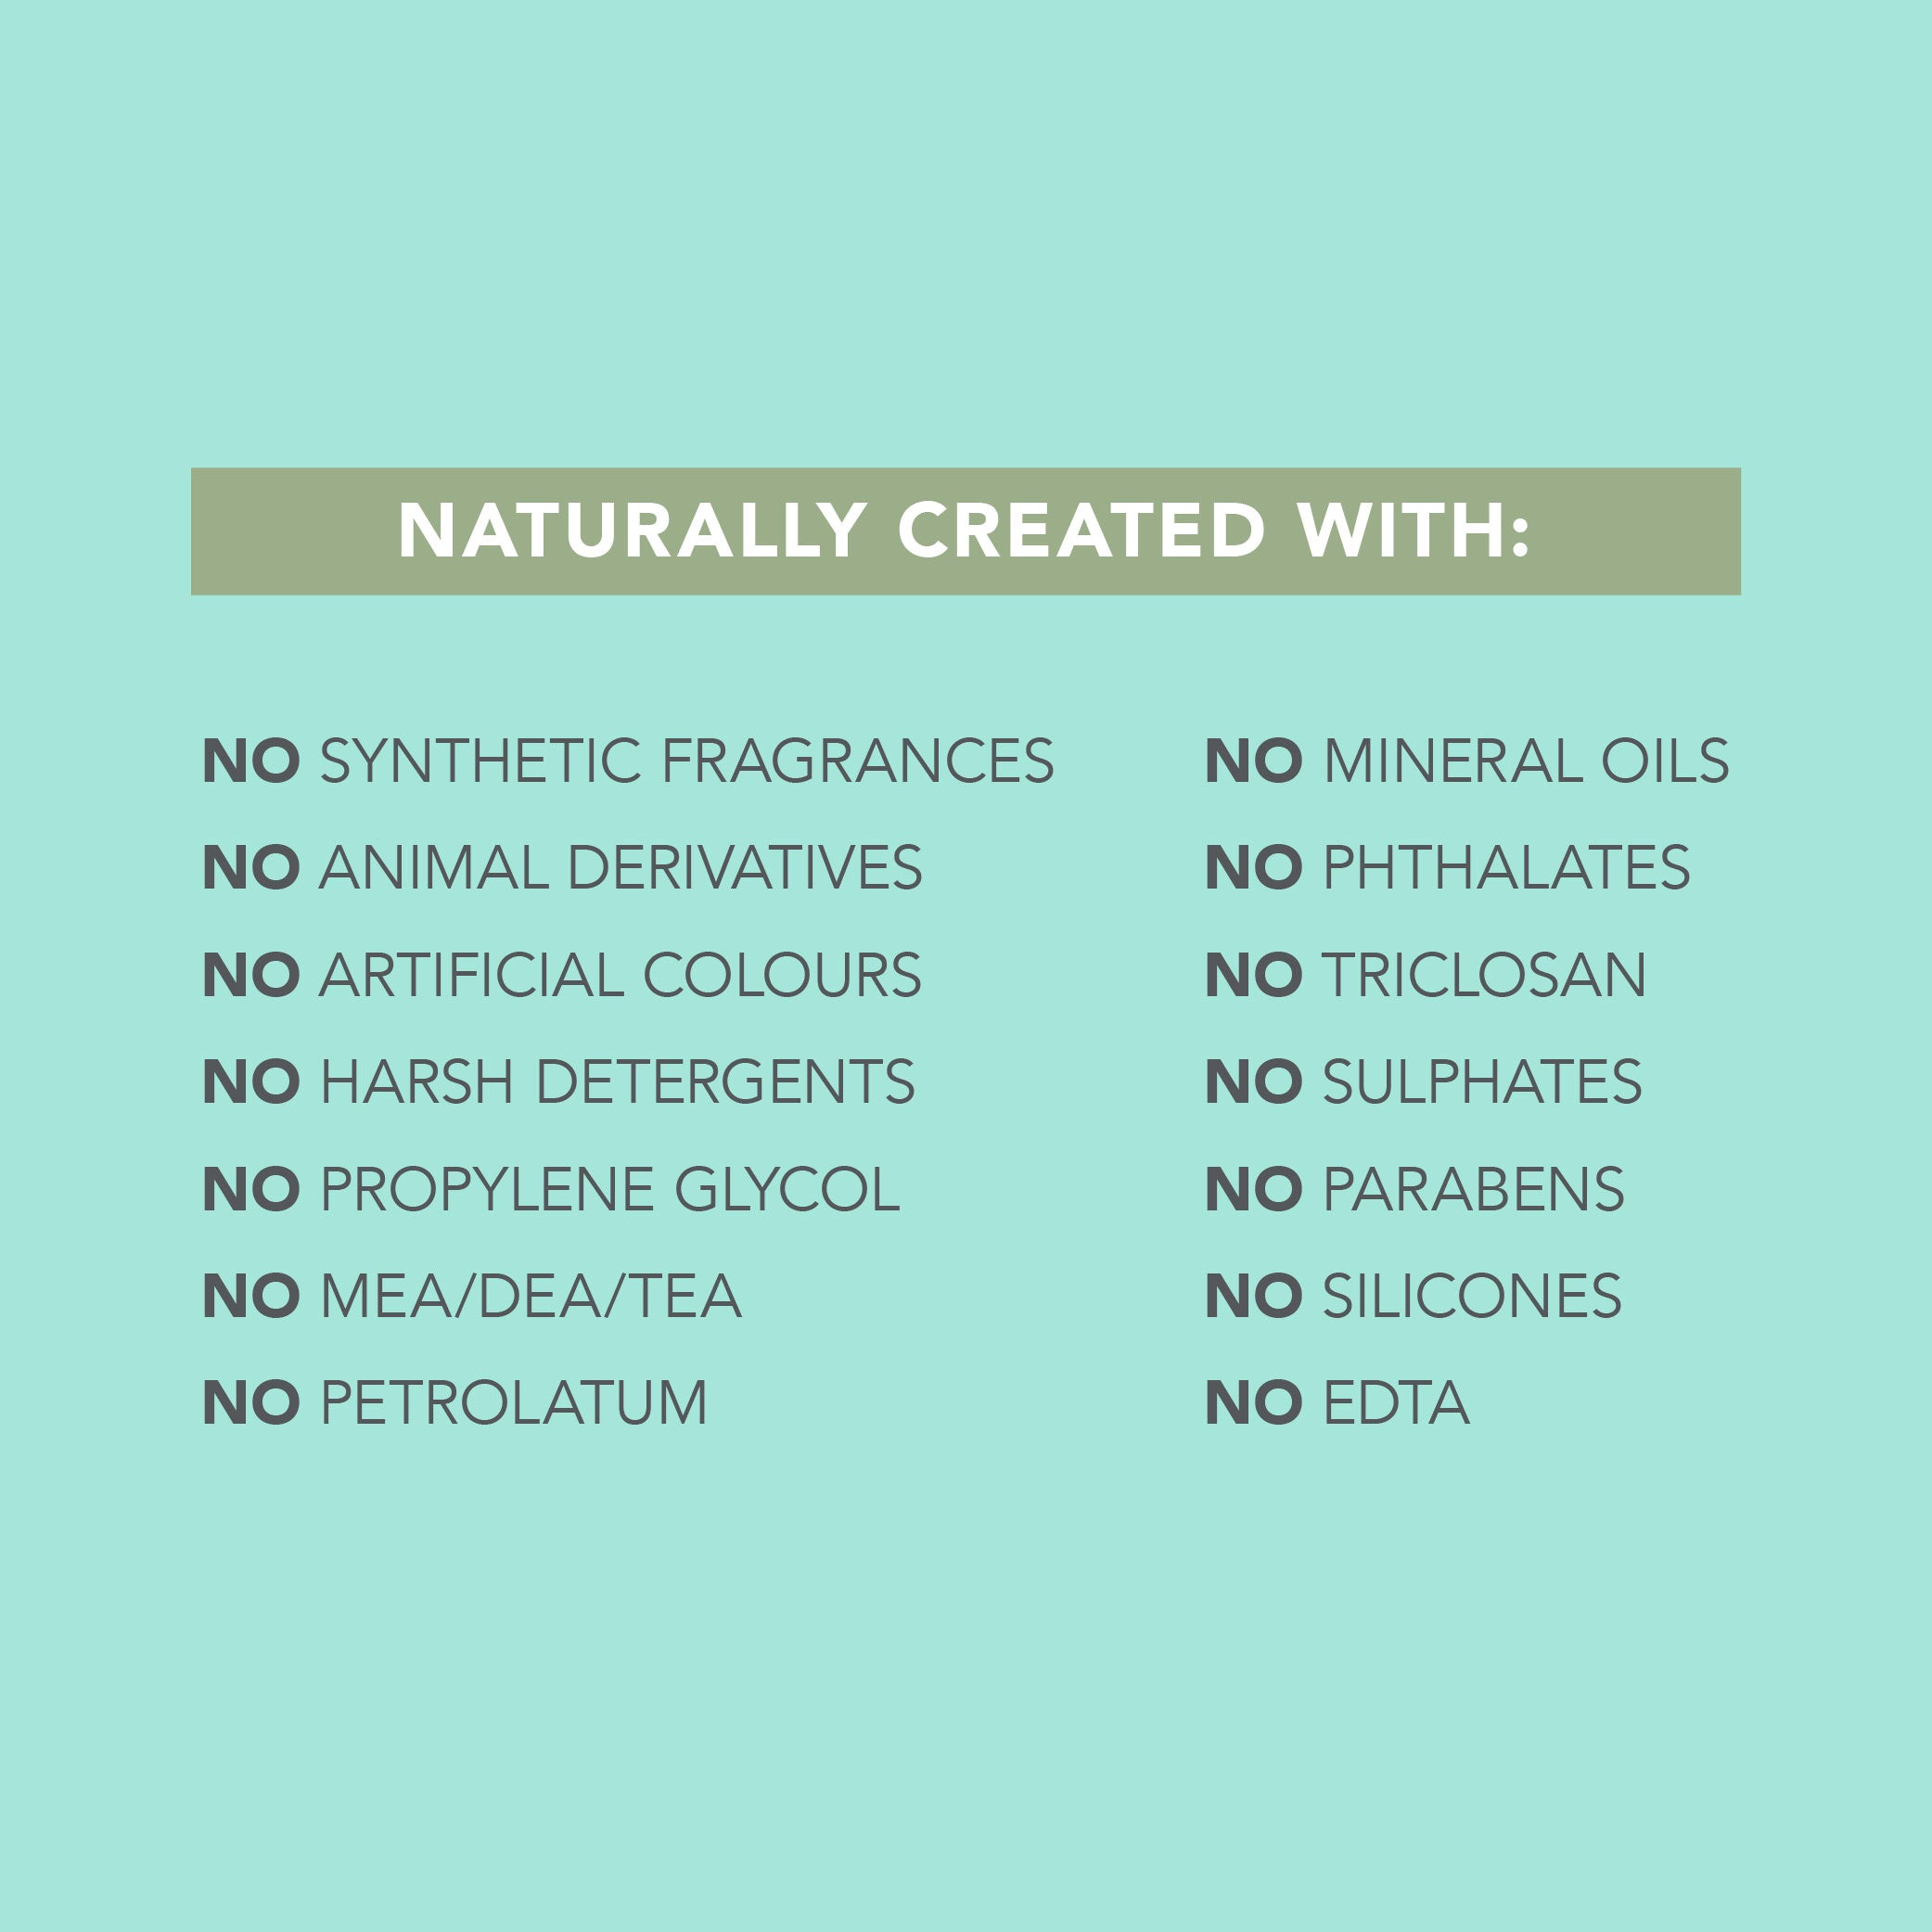 Natural and Organic Skincare | Sukin Naturals